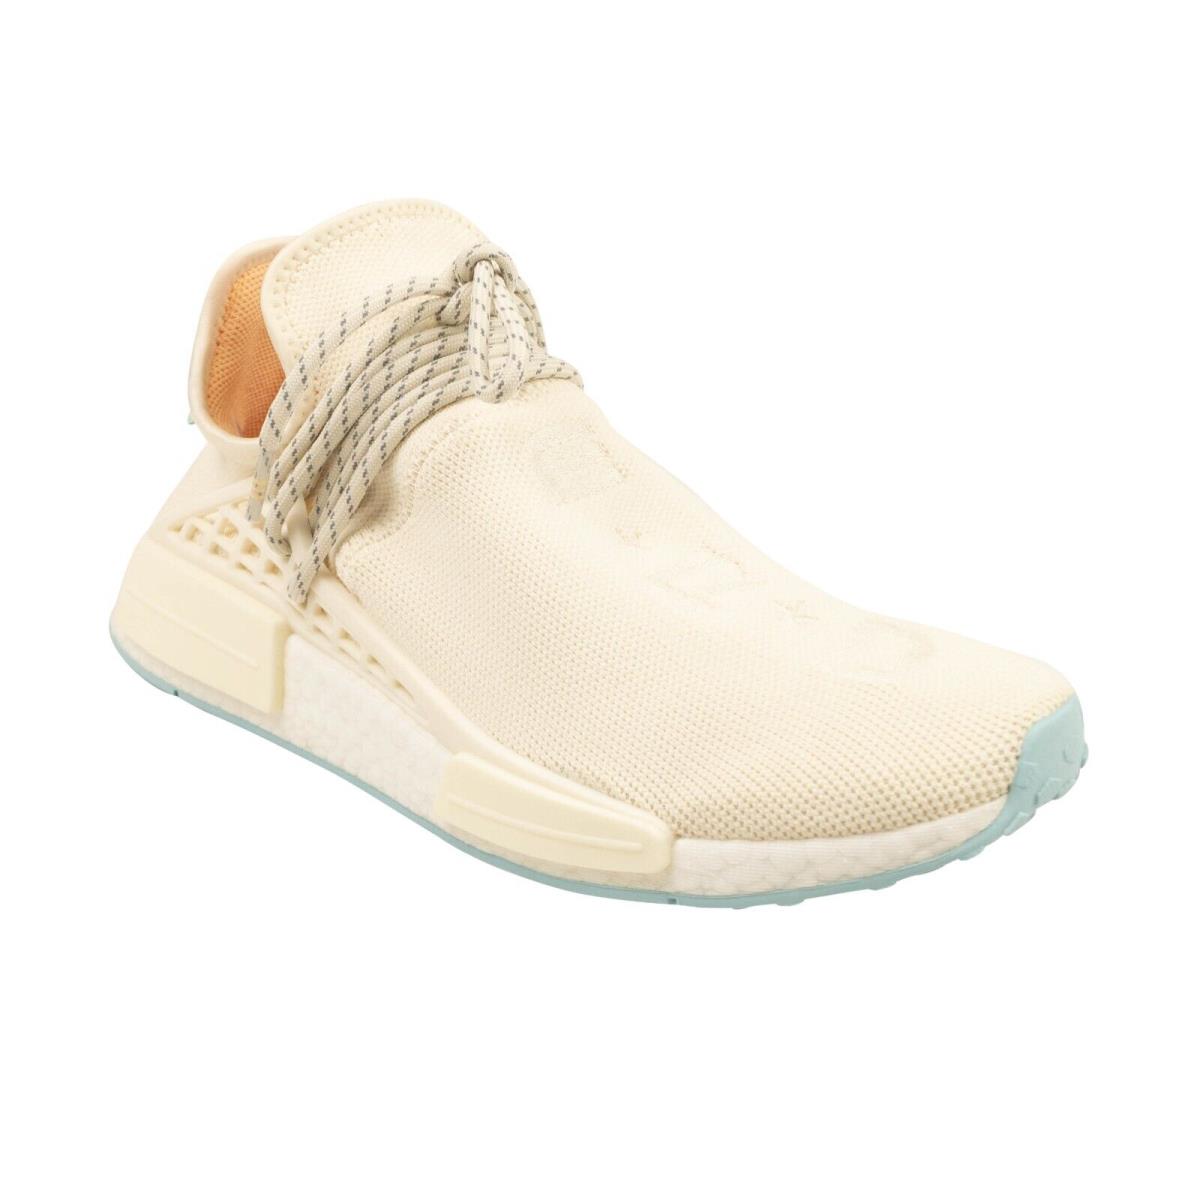 Adidas Chalk White Glow x Nerd Nmd Hu Sneakers Size 5/38